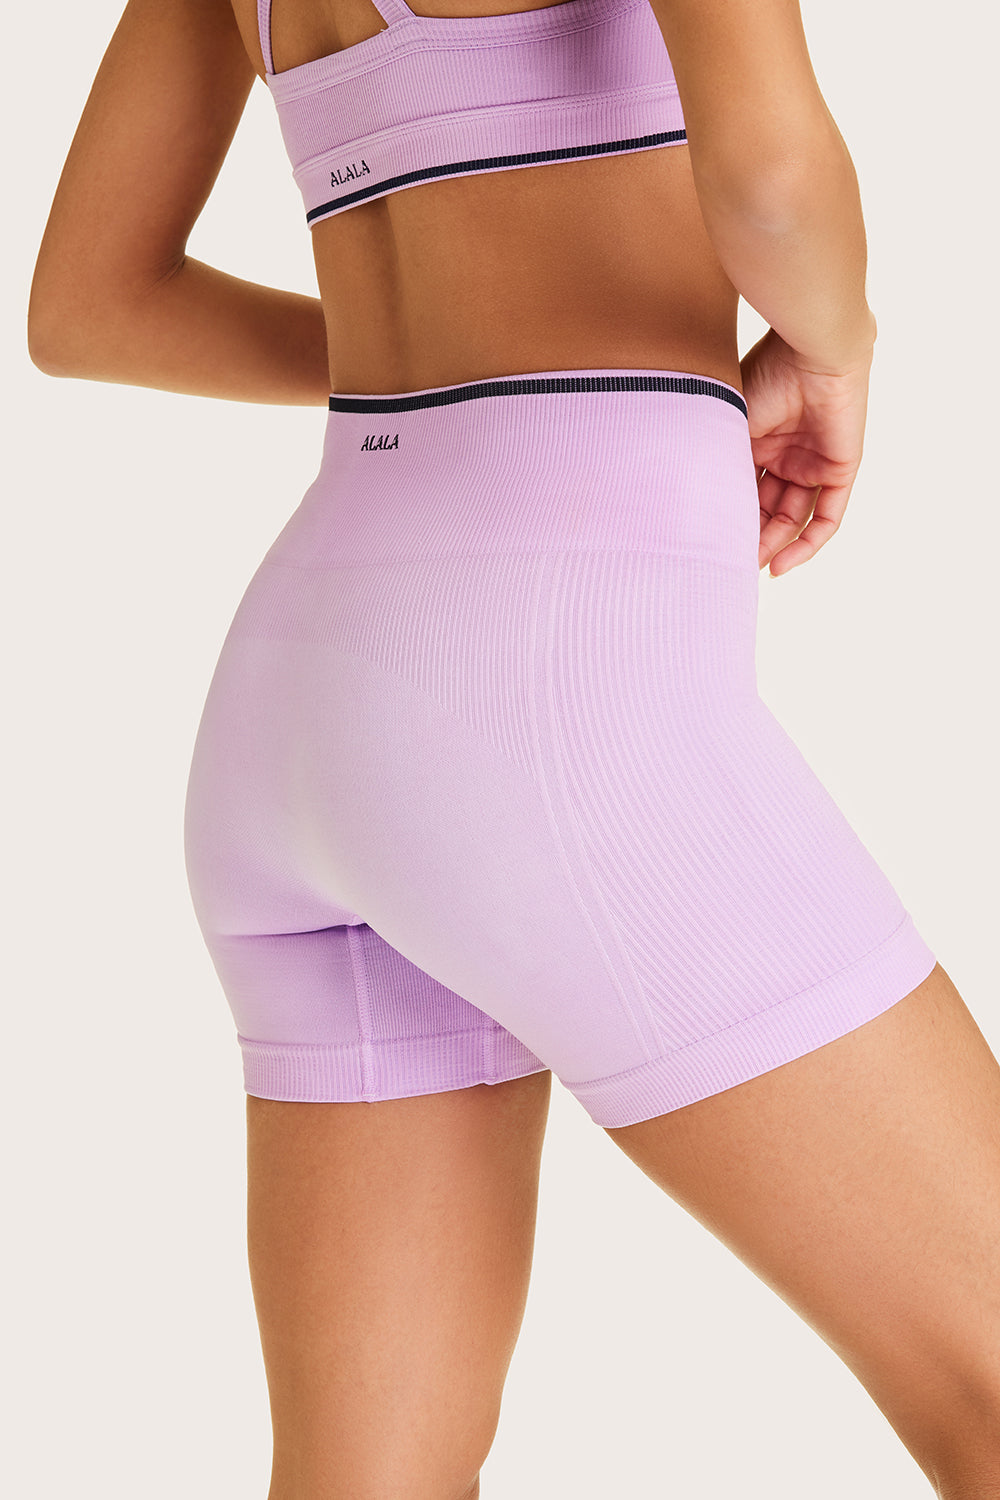 Lululemon Purple Forme Women's Pants Size 10 - $36 - From Madi